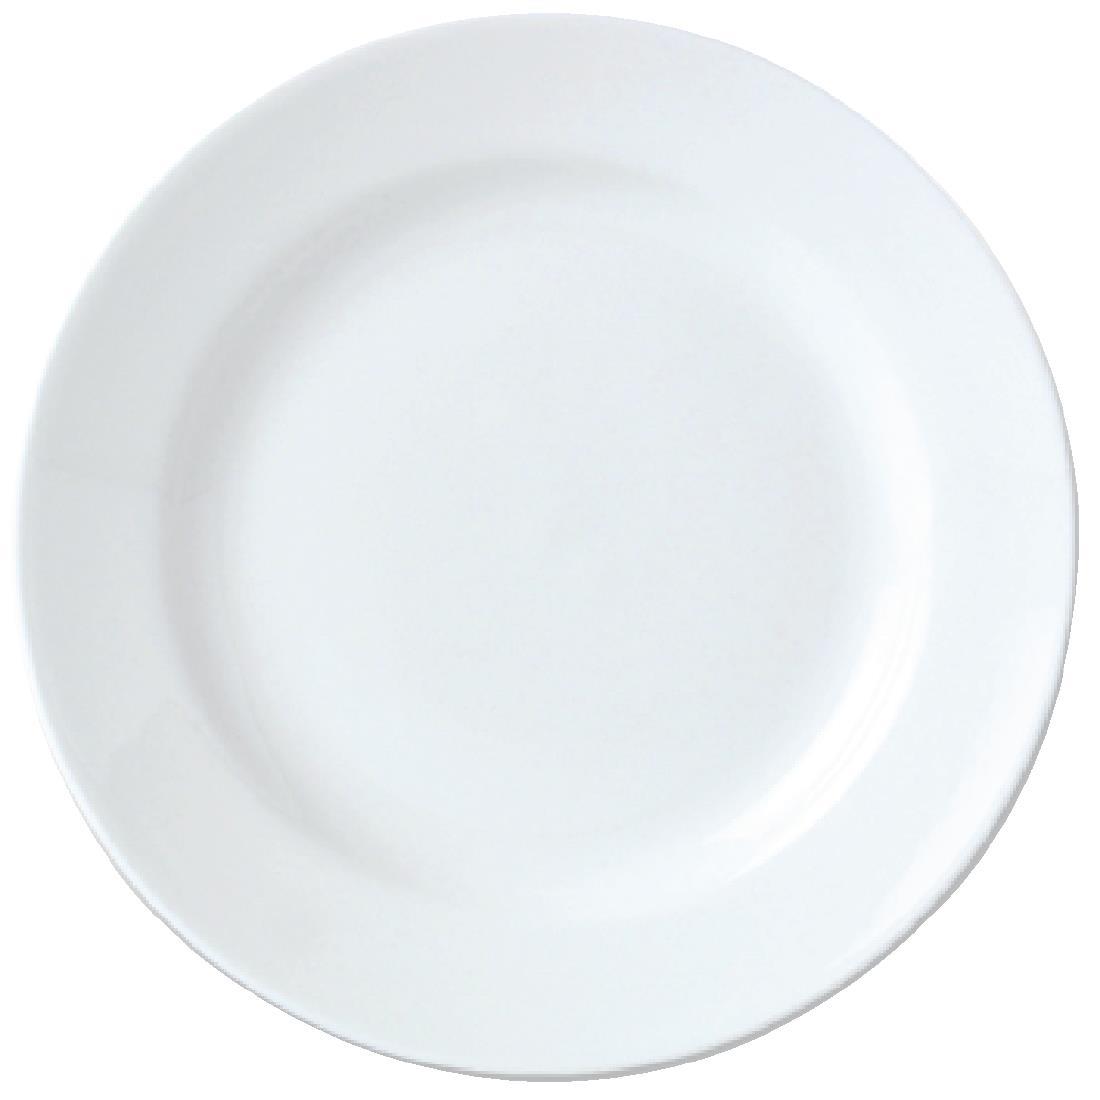 Steelite Simplicity White Harmony Plates 165mm (Pack of 36) - V9254  - 1